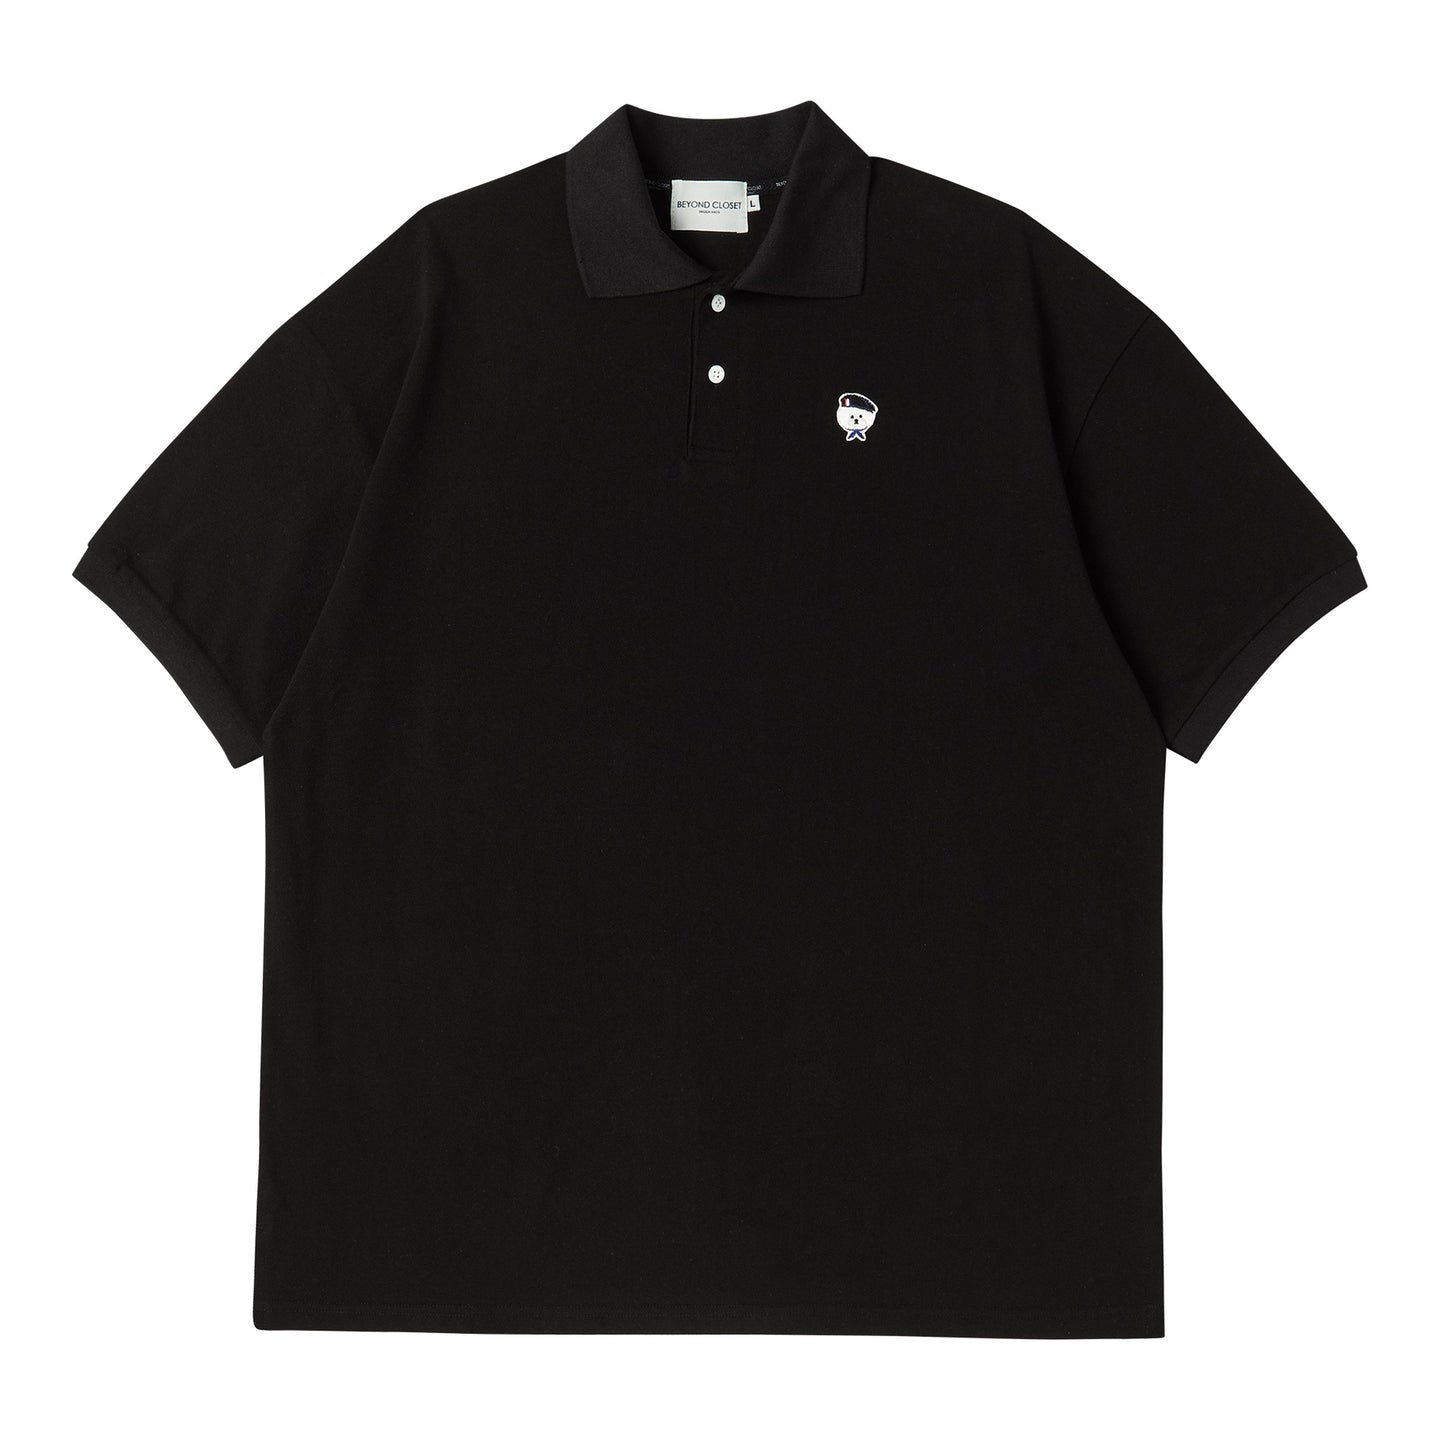 BEYOND CLOSET New Parisian PK T-Shirt Black